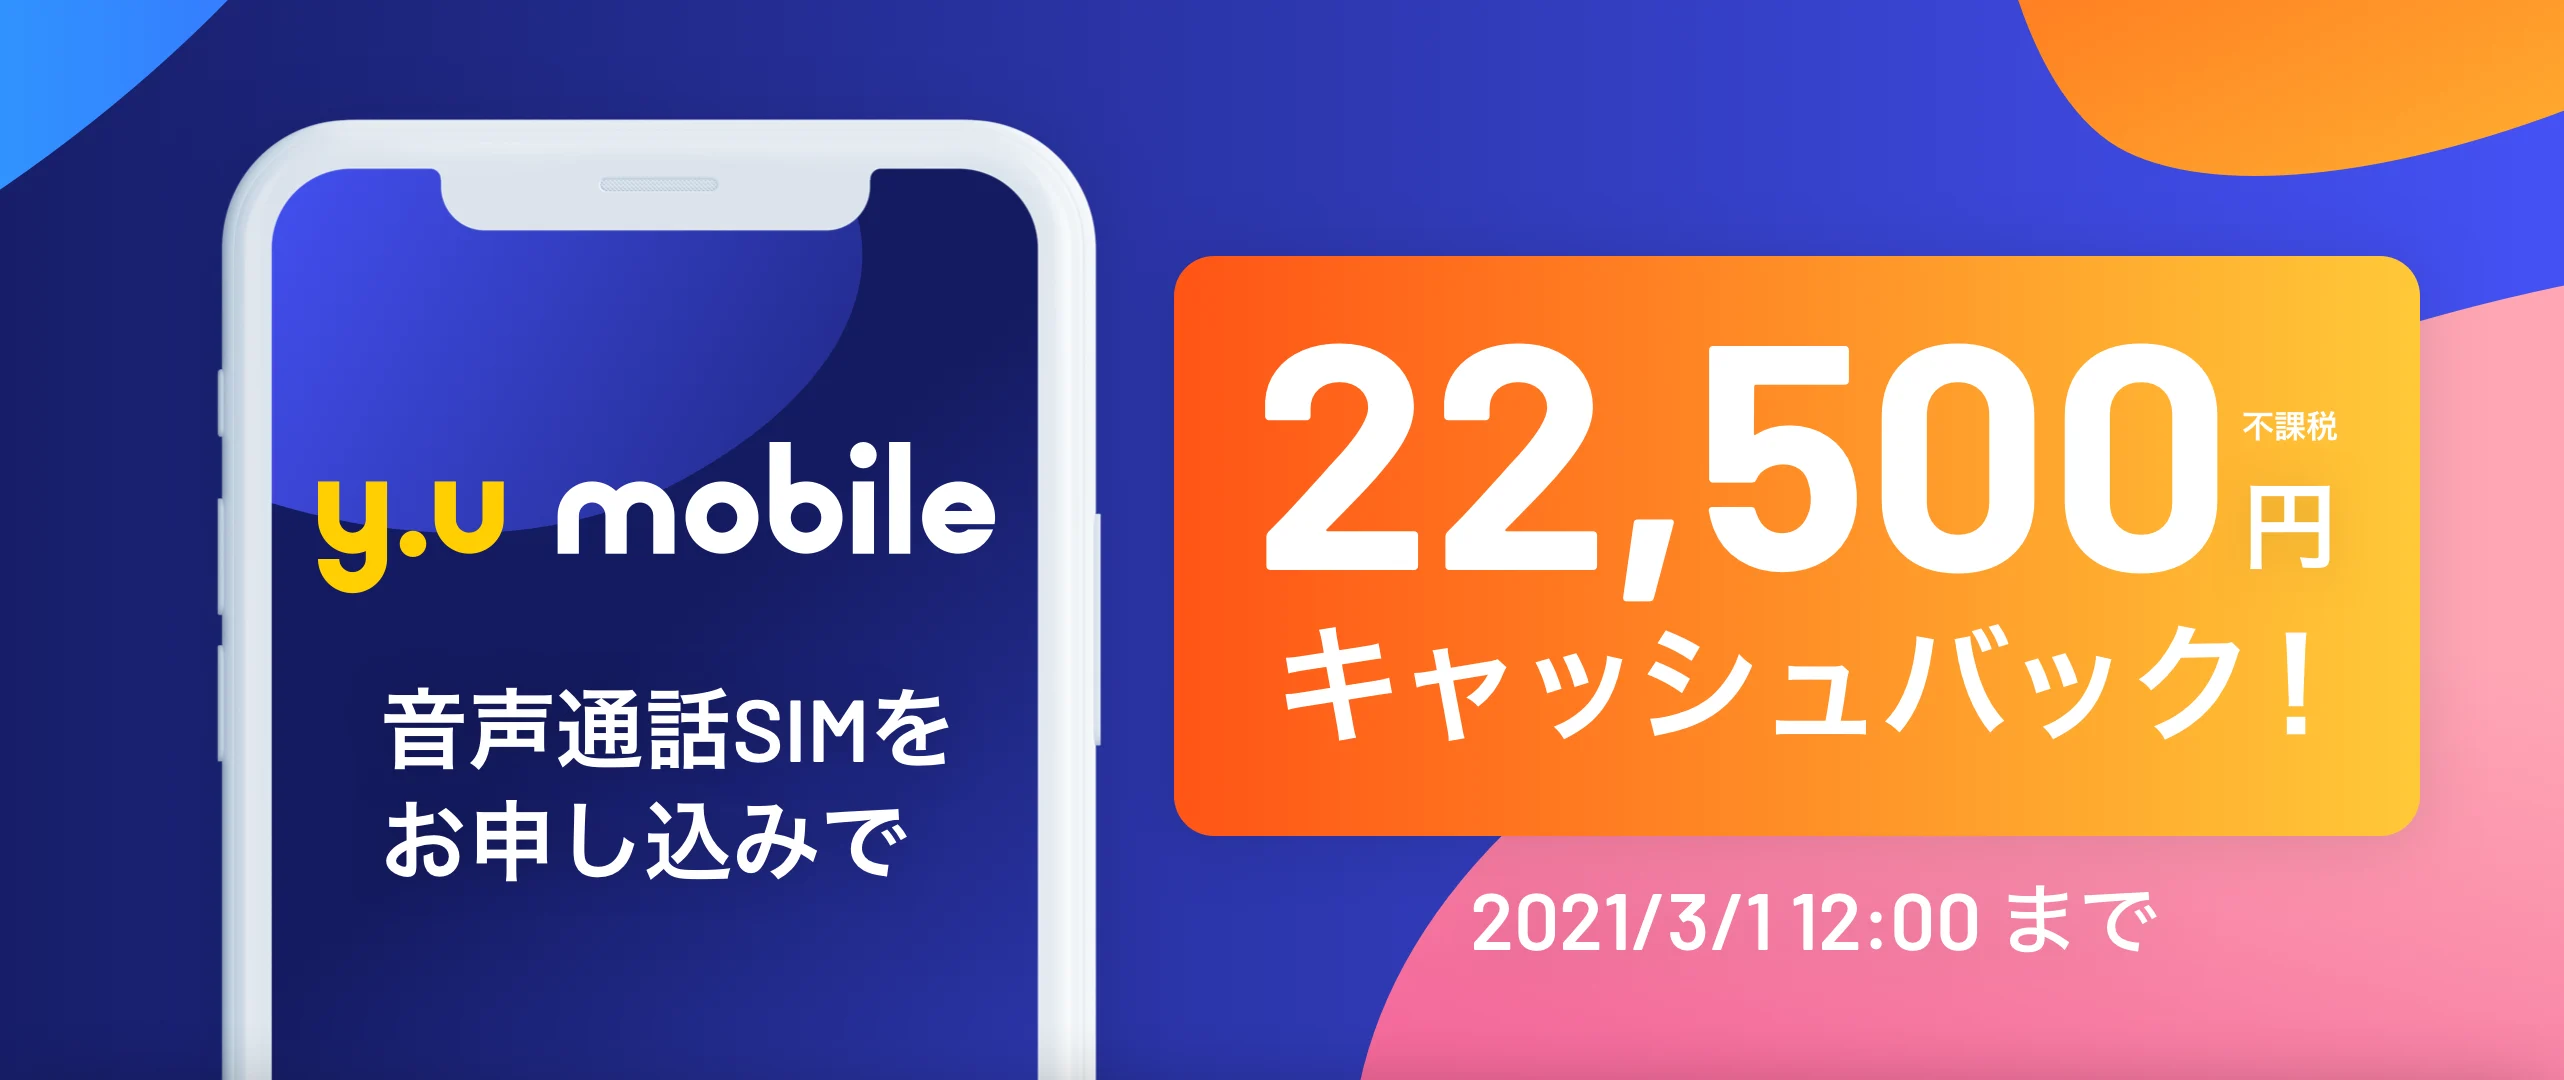  y.u mobile22,500円キャッシュバックキャンペーン